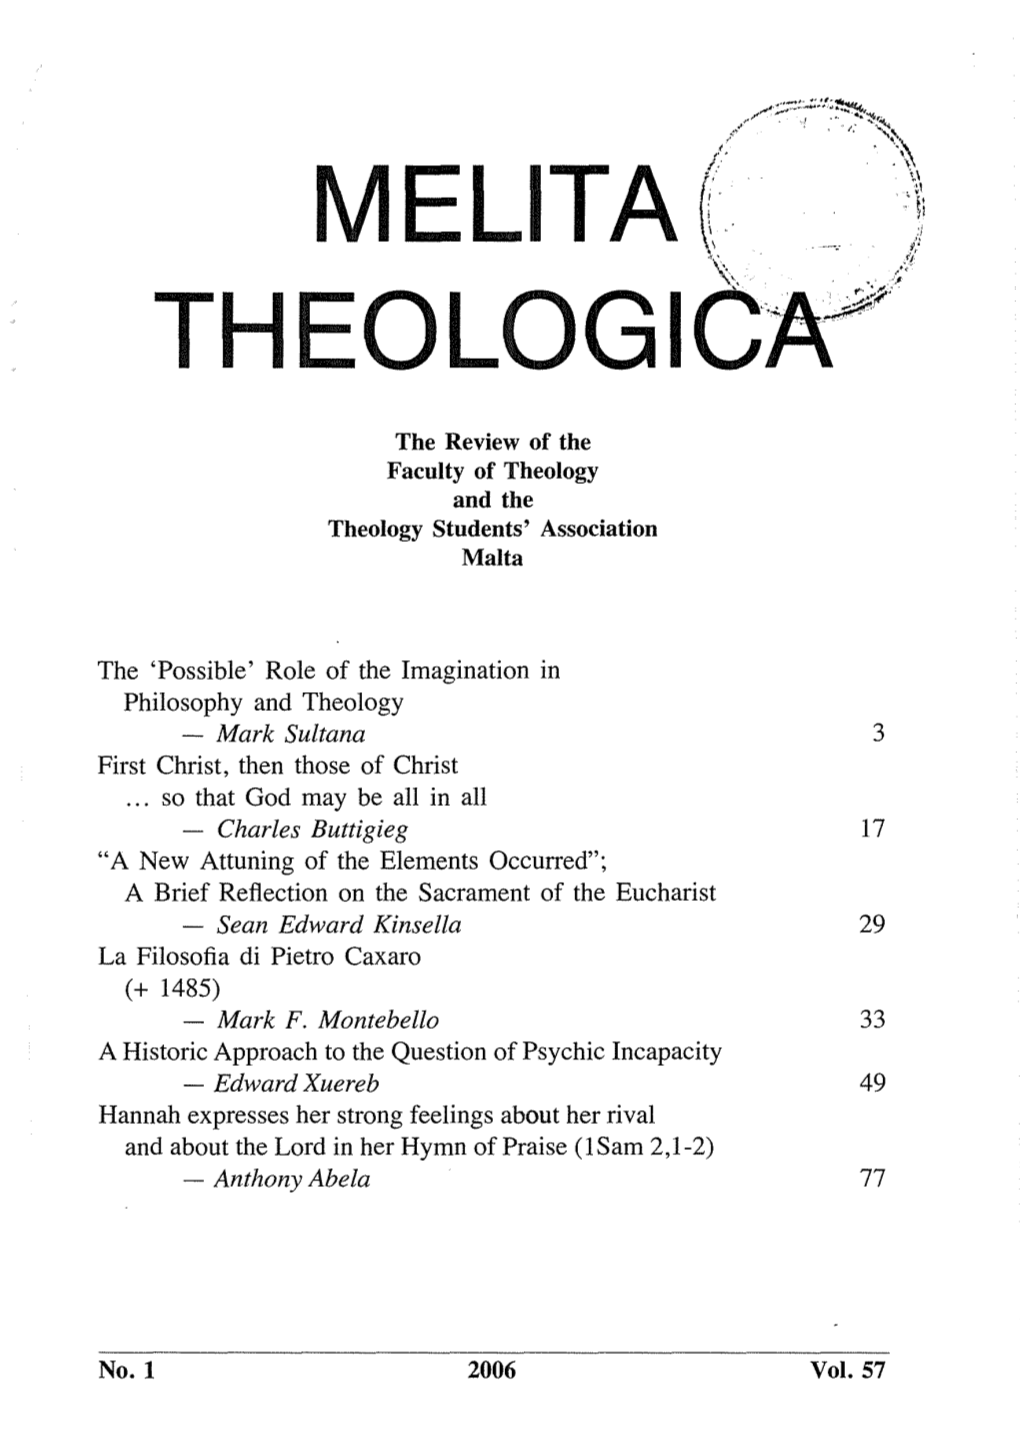 Melita Theologica 57(1) 2006.PDF